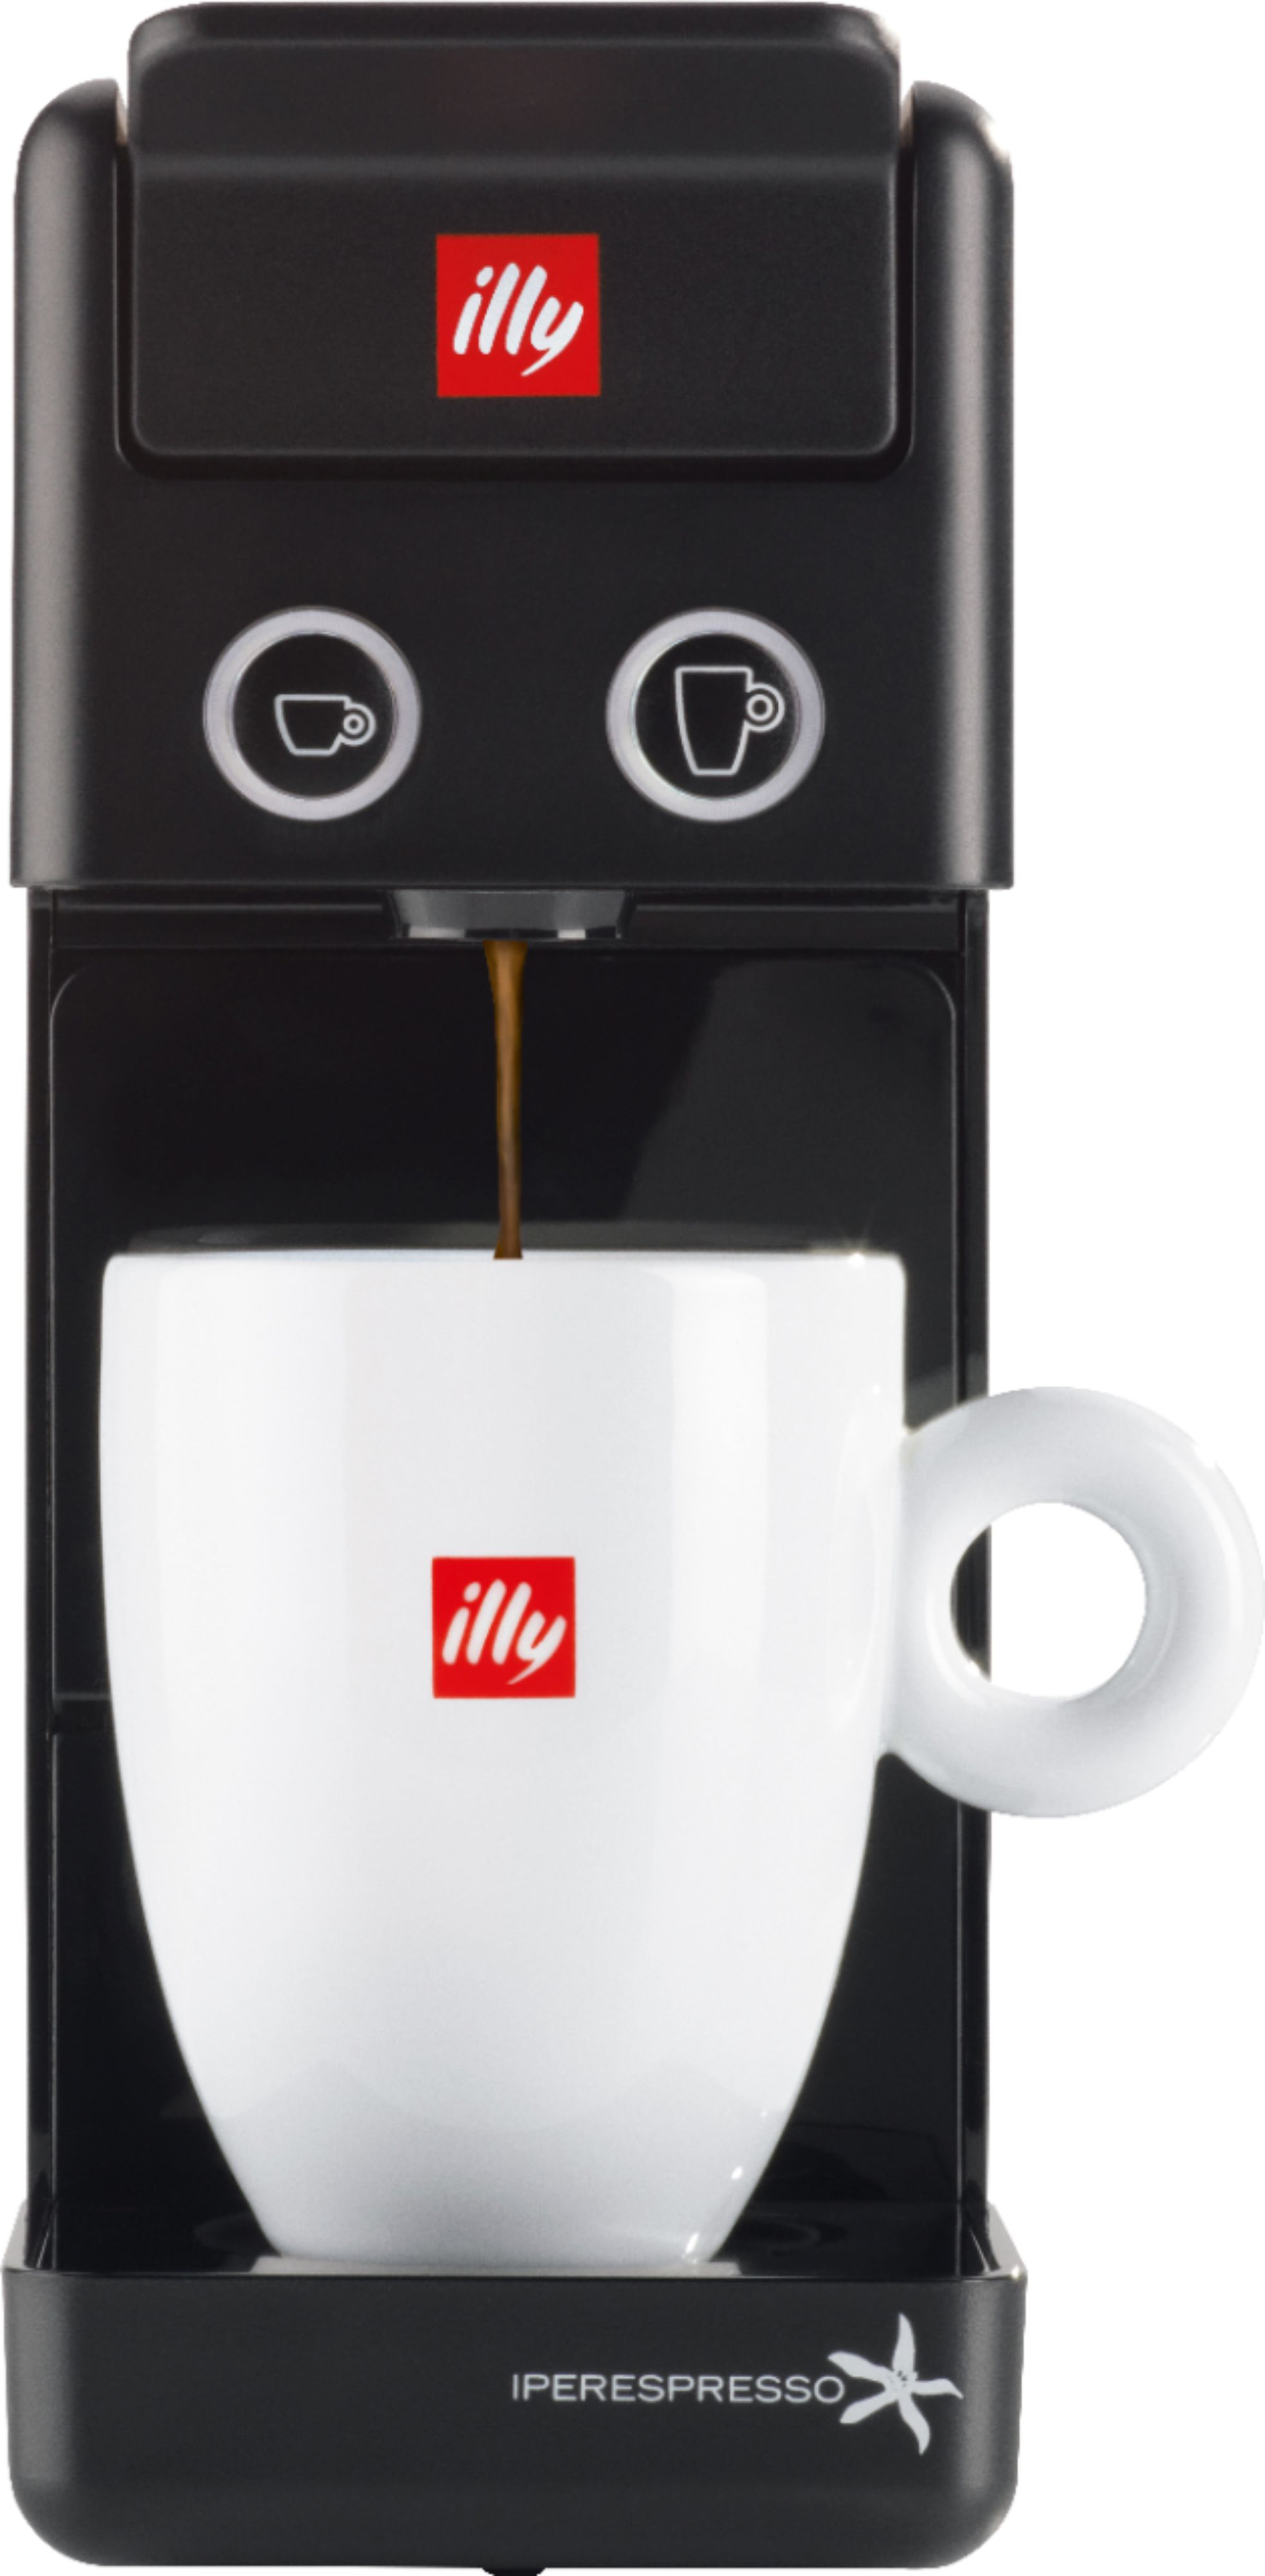 illy Y3.3 iperEspresso Coffee &Espresso Capsule Machine - Black